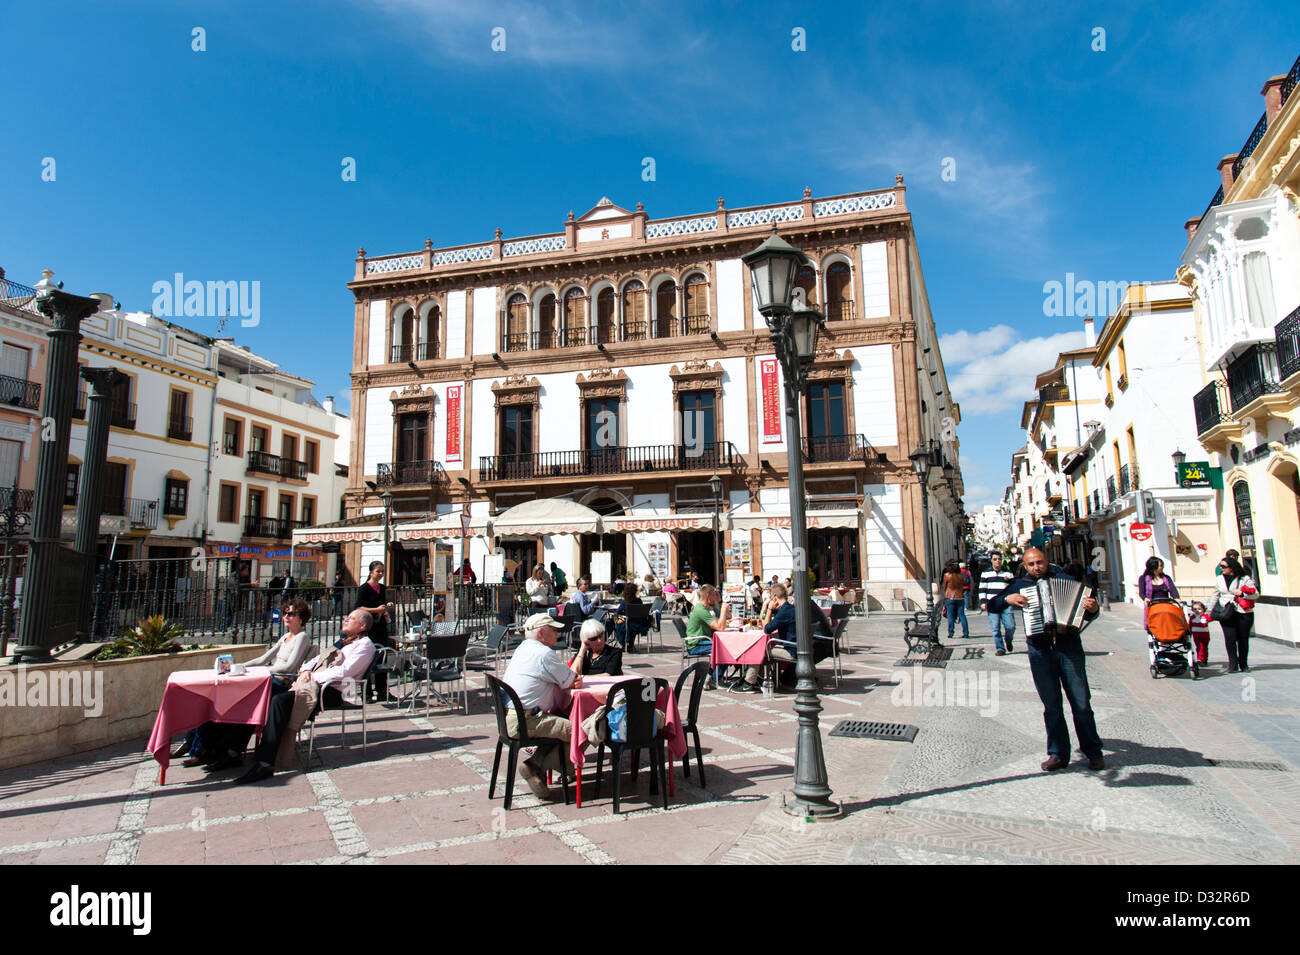 Plaza del Socorro, Ronda, Spain Stock Photo